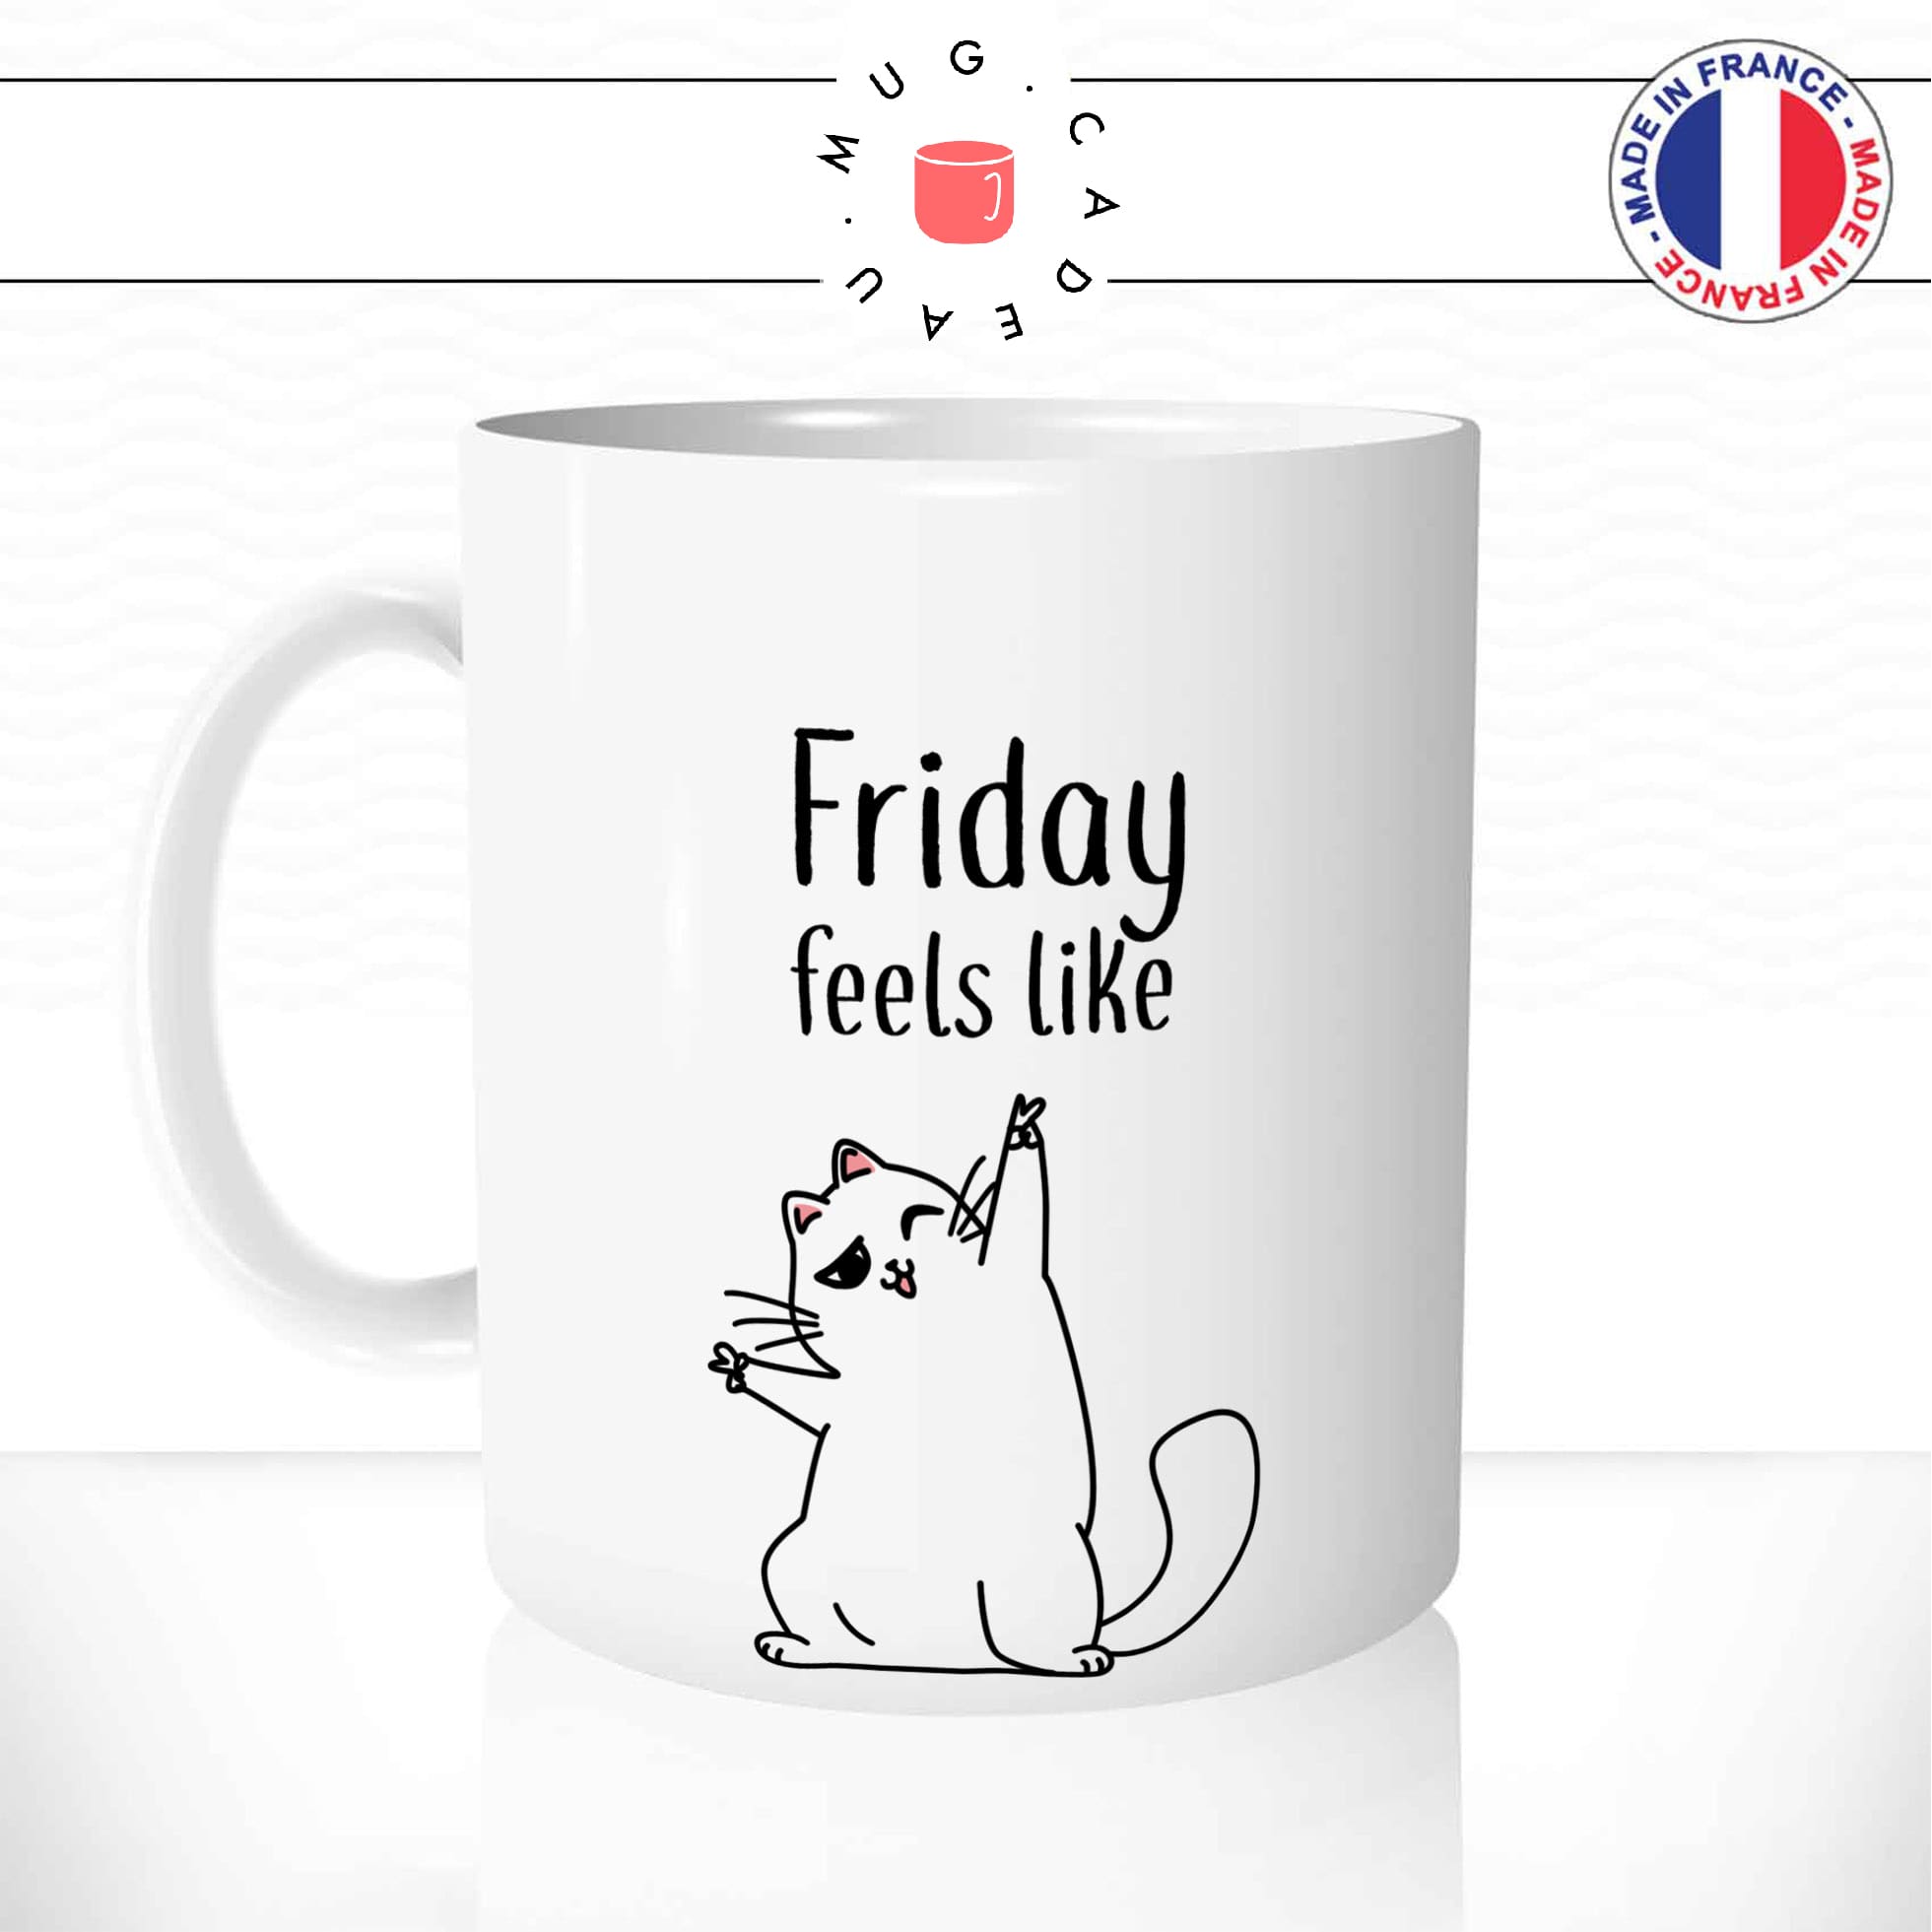 mug-tasse-feels-like-chat-cat-chaton-week-end-friday-vendredi-fin-semaine-travail-idee-cadeau-cool-fun-original-personnalisé1